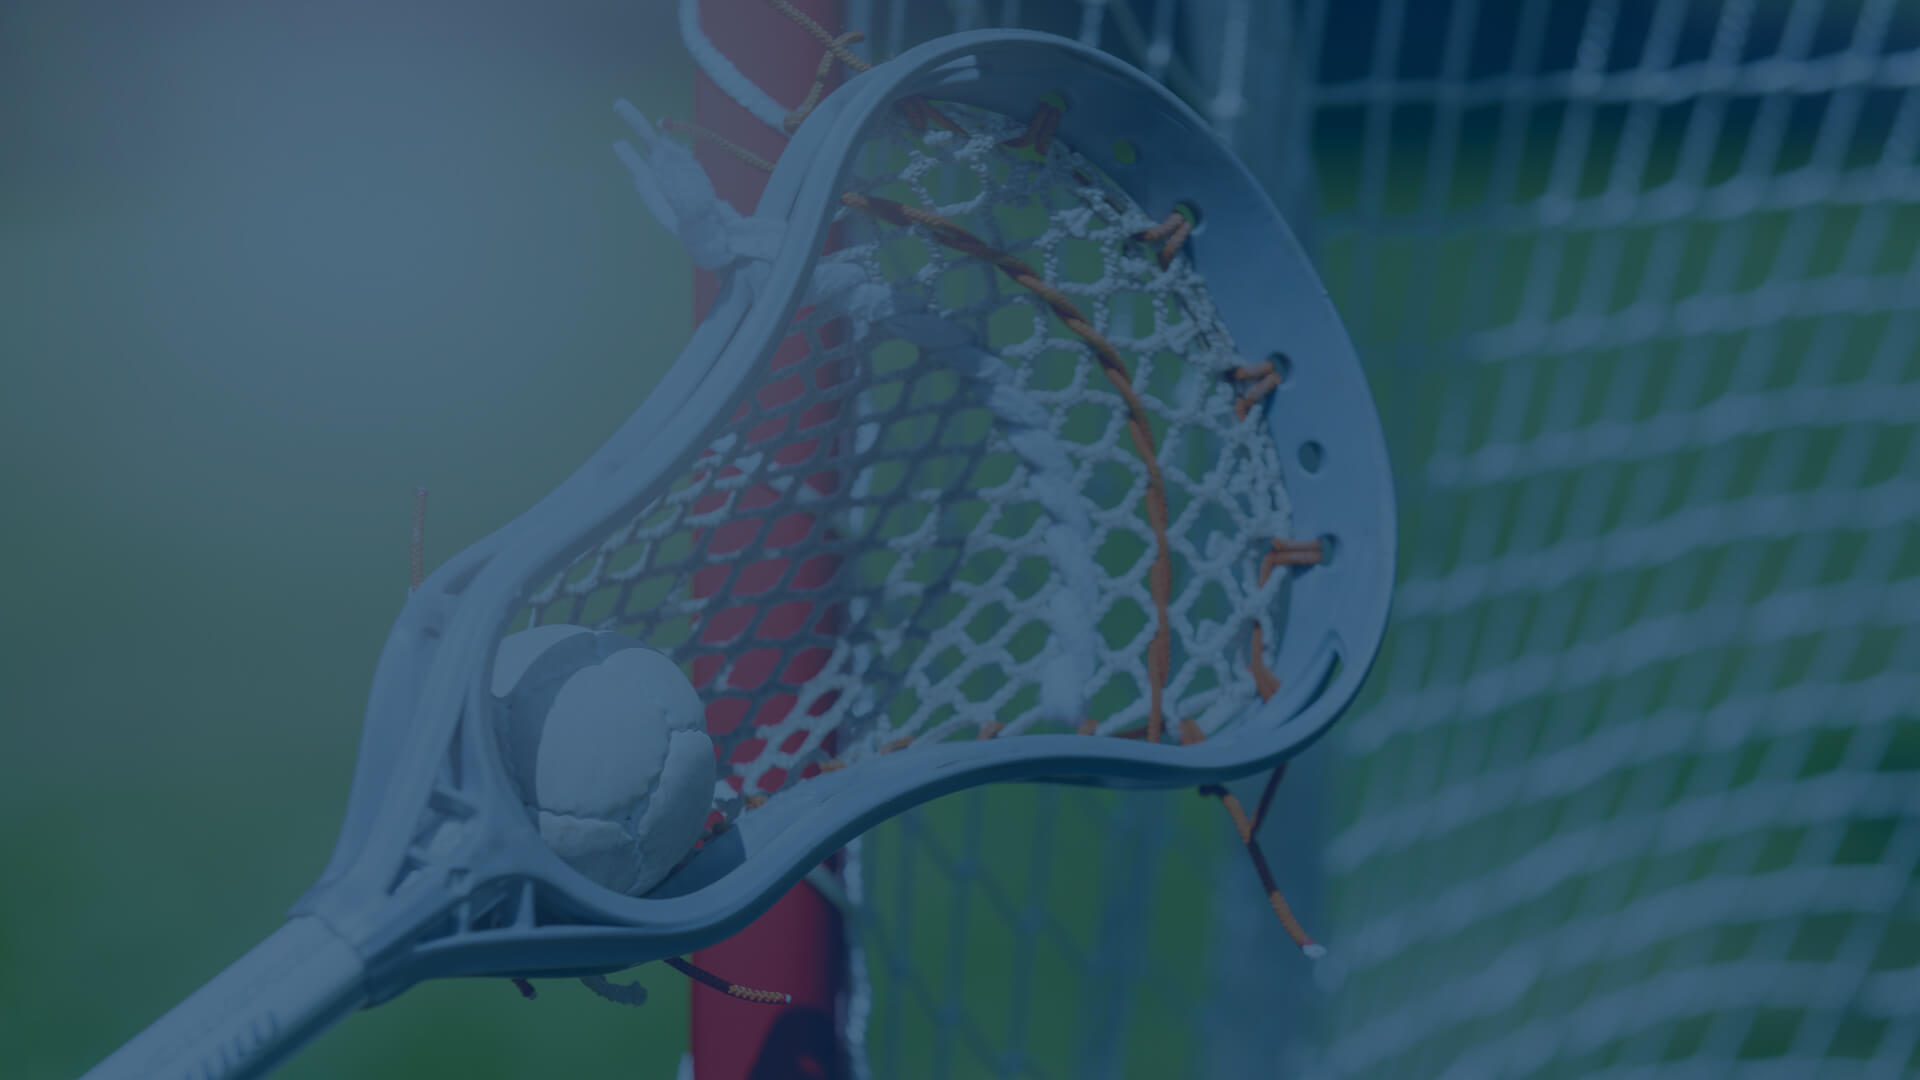 Lacrosse stick holding lacrosse ball in front of net